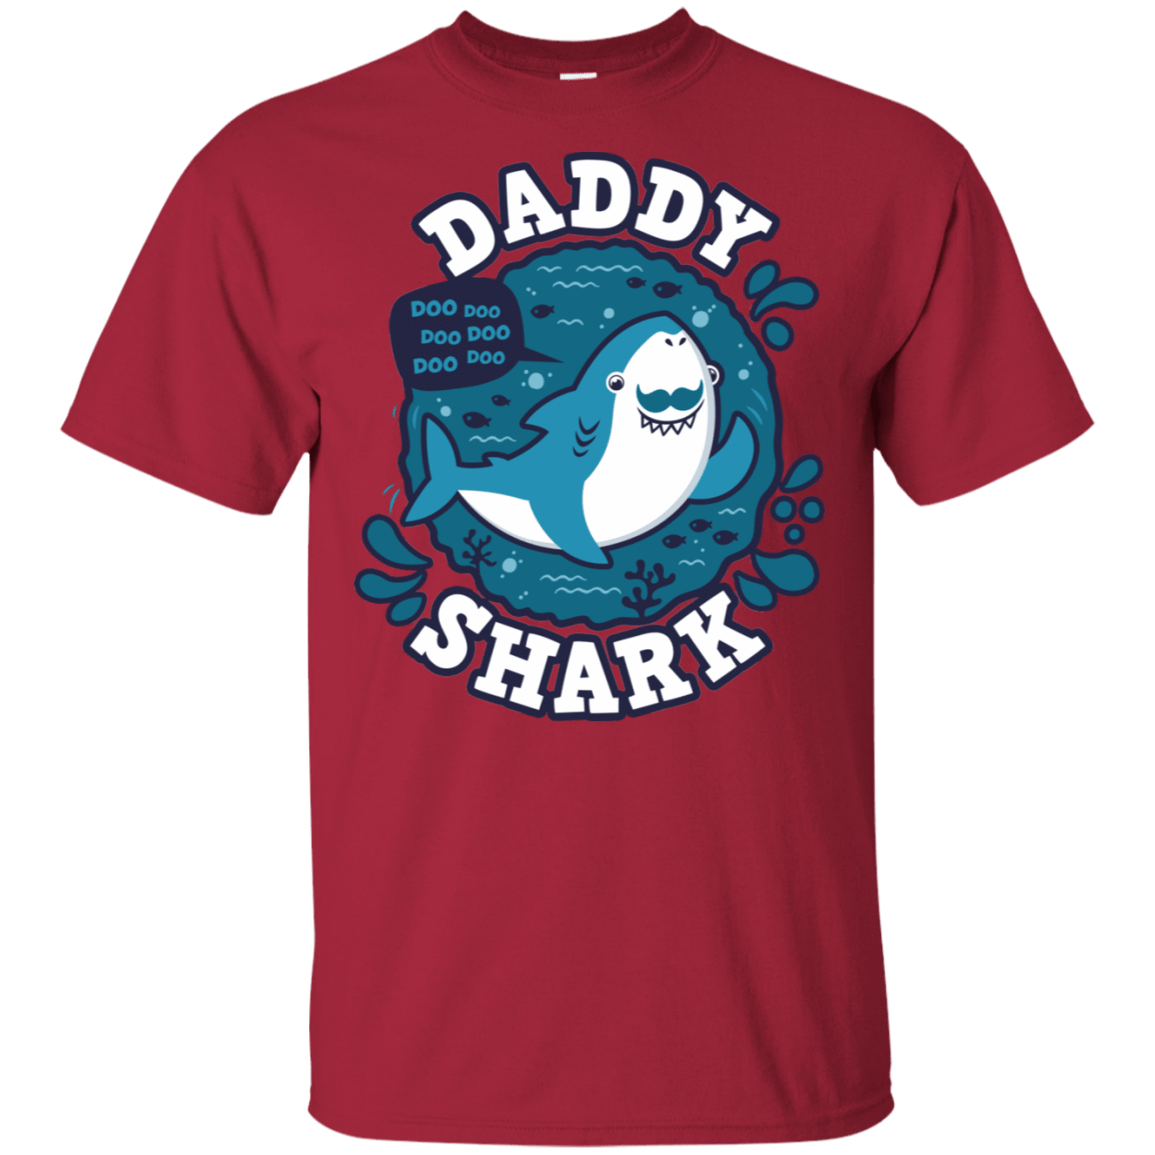 T-Shirts Cardinal / S Shark Family trazo - Daddy T-Shirt